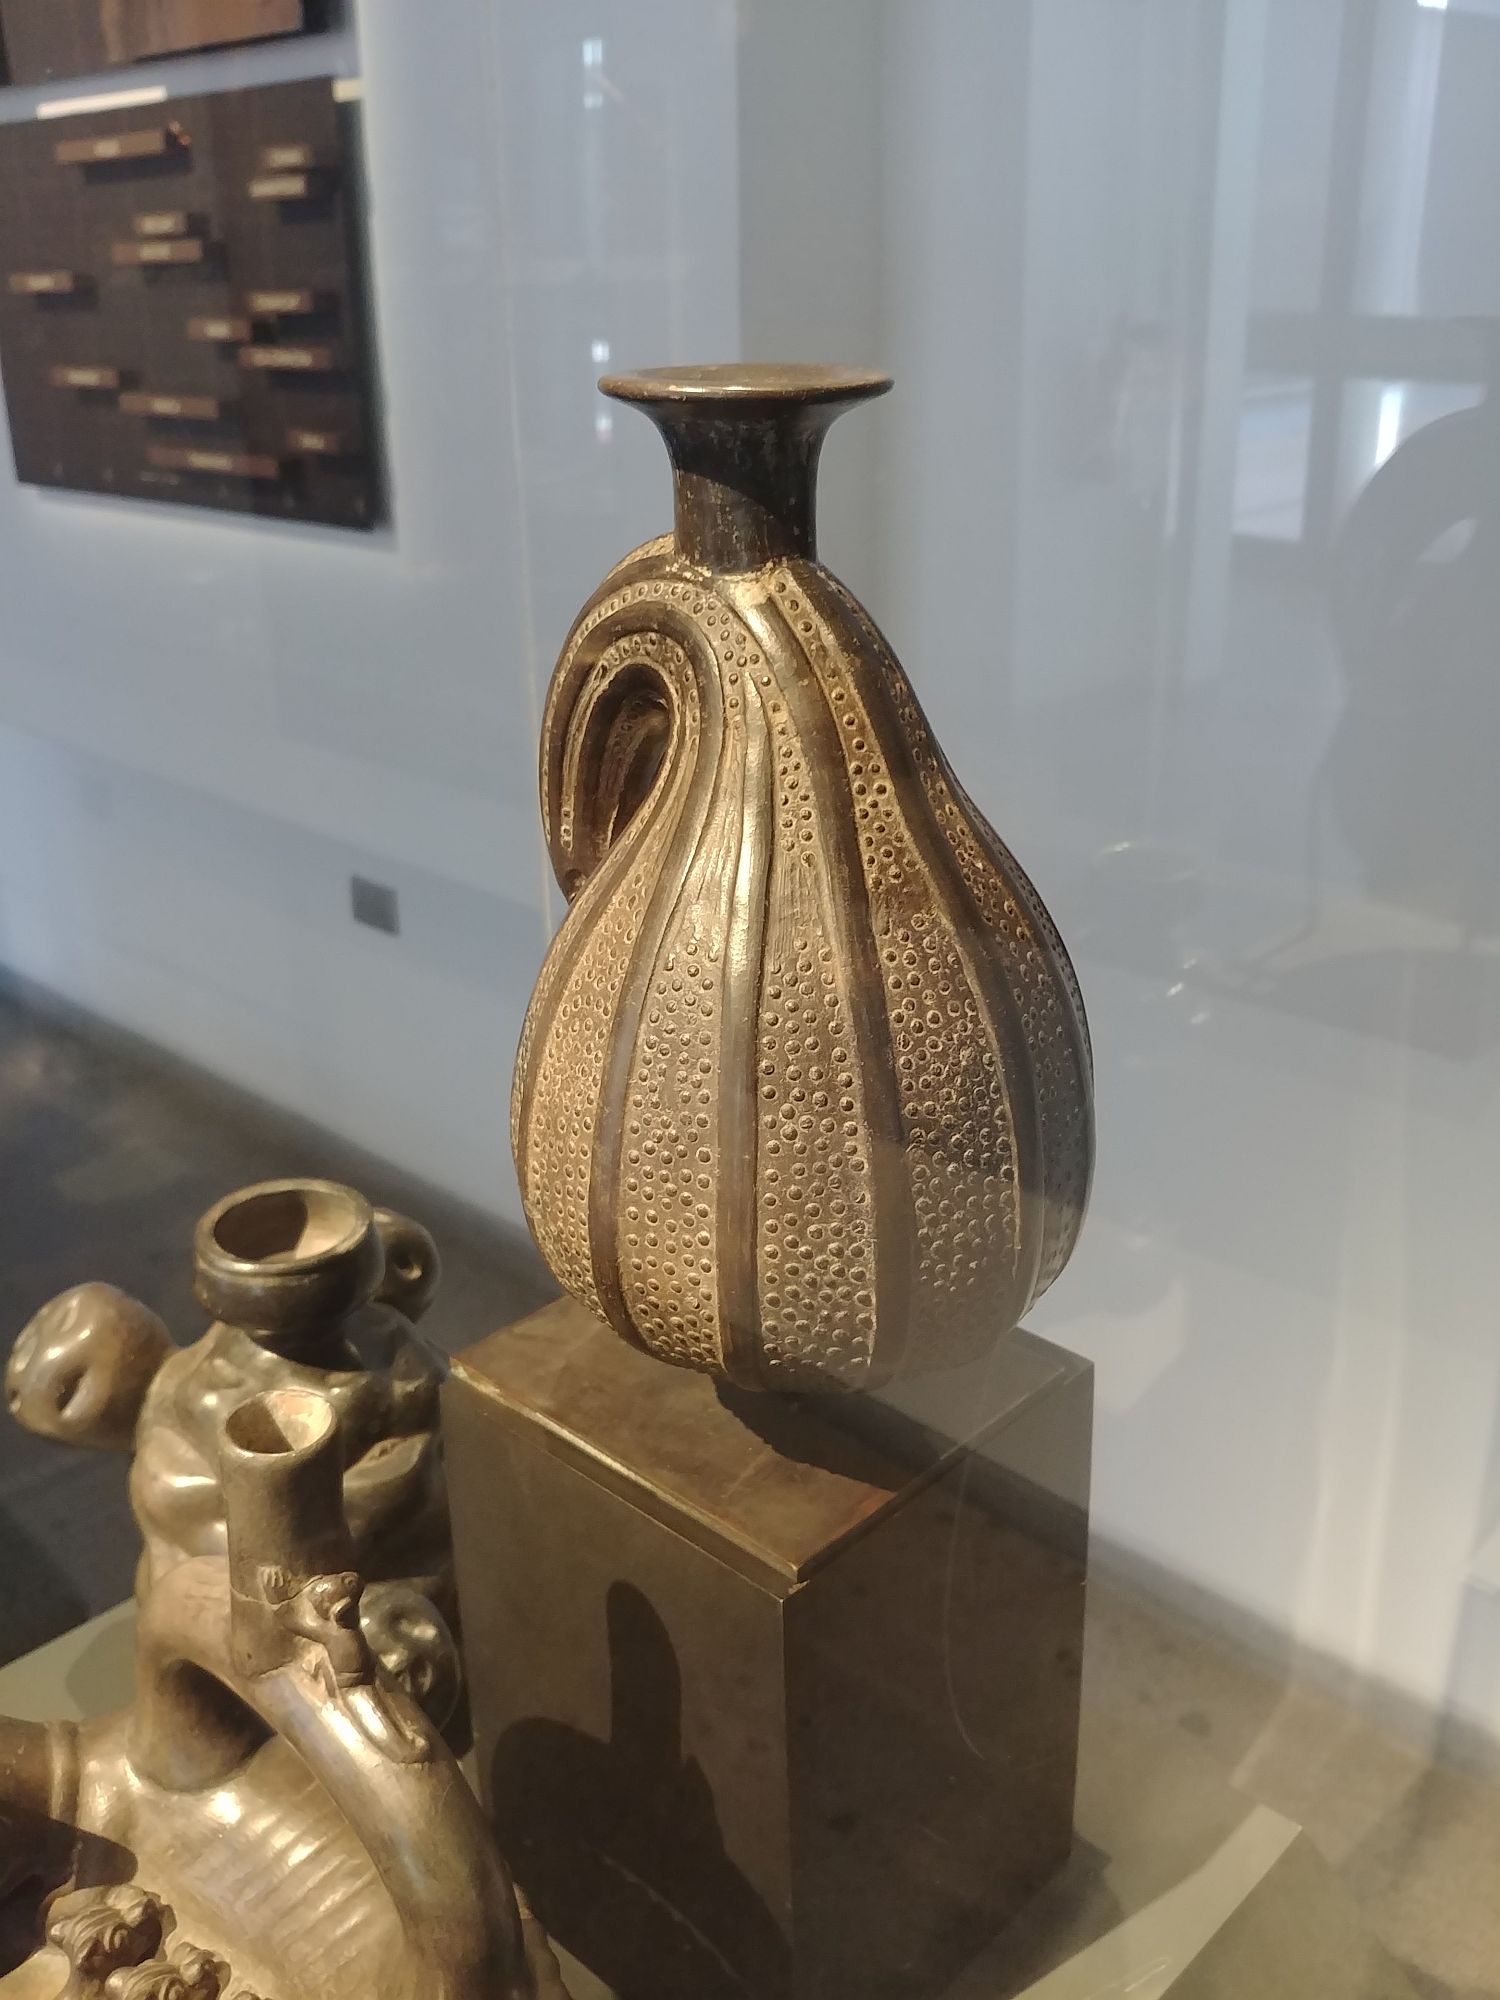 Santiago - Chilean Museum of Pre-Columbian Art - 12 - Gourd-shaped vessel - Chimu pottery